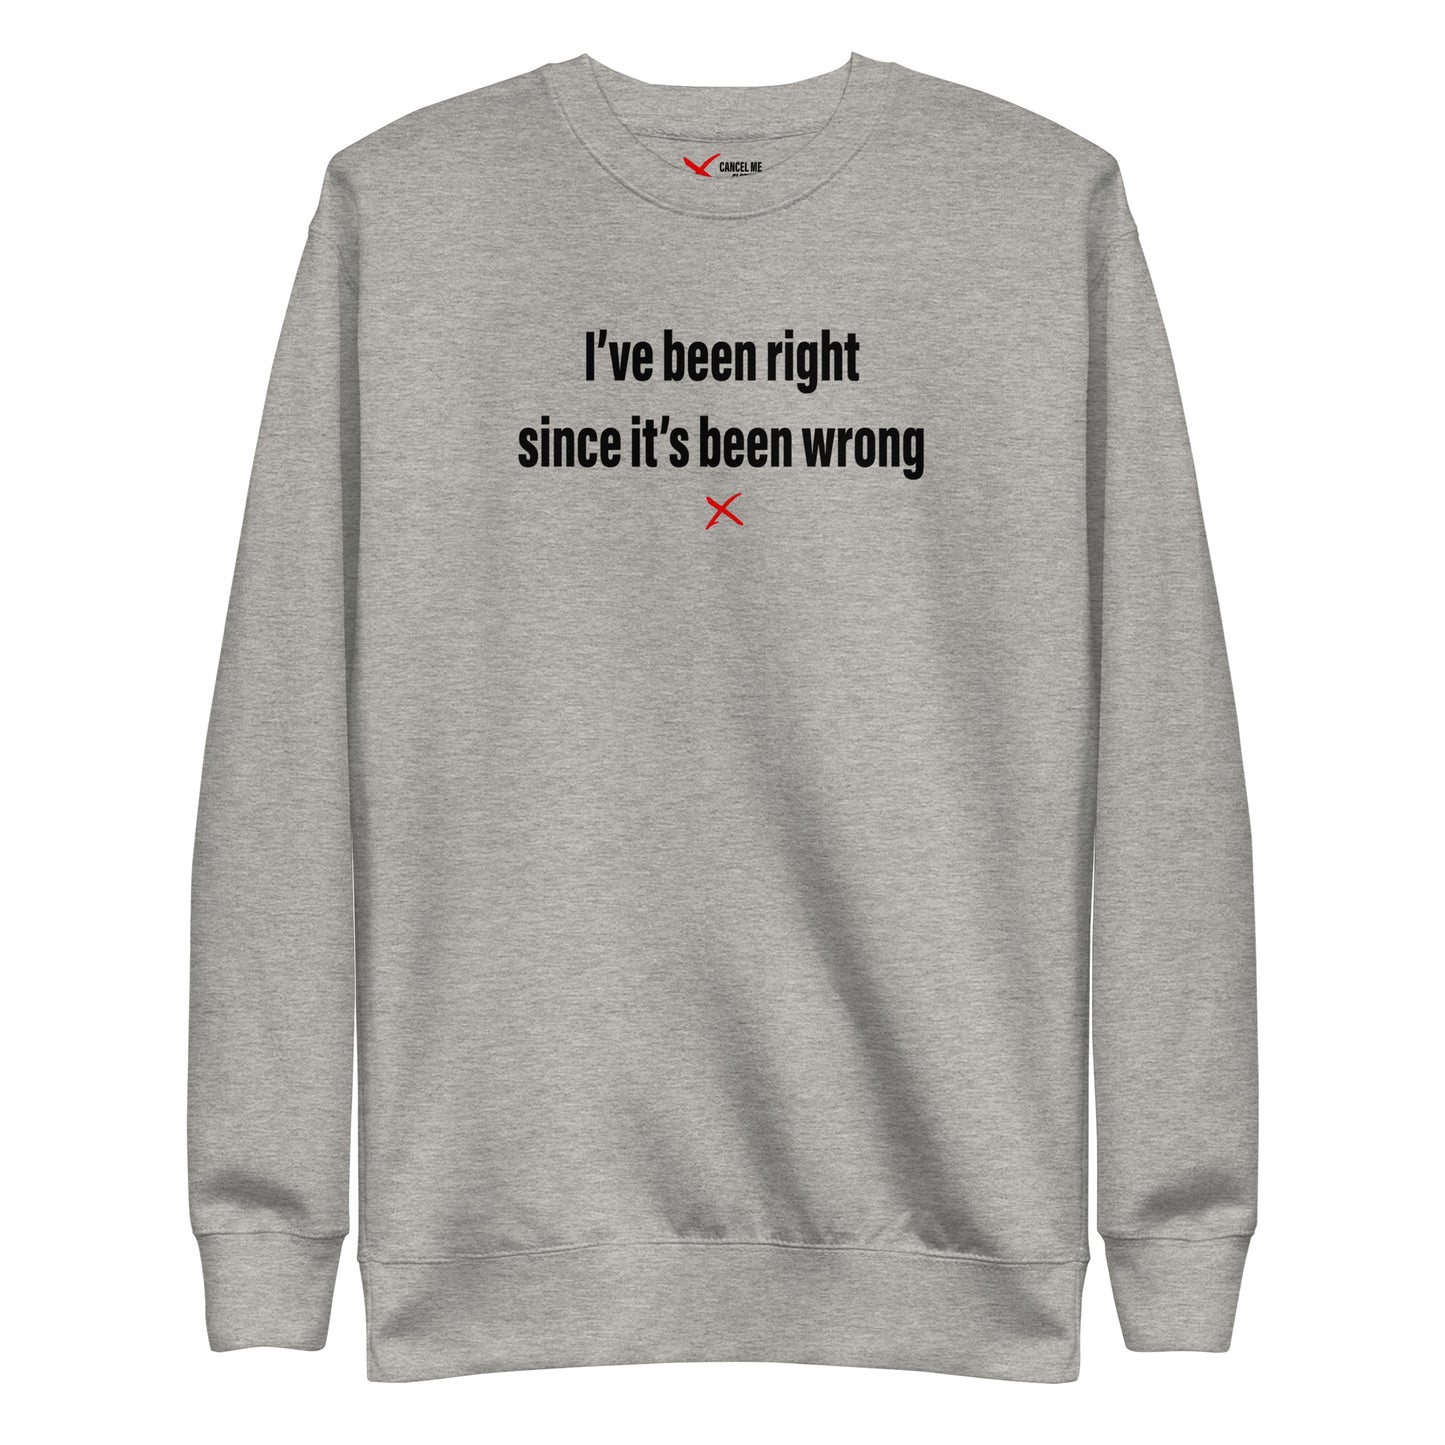 I've been right since it's been wrong - Sweatshirt